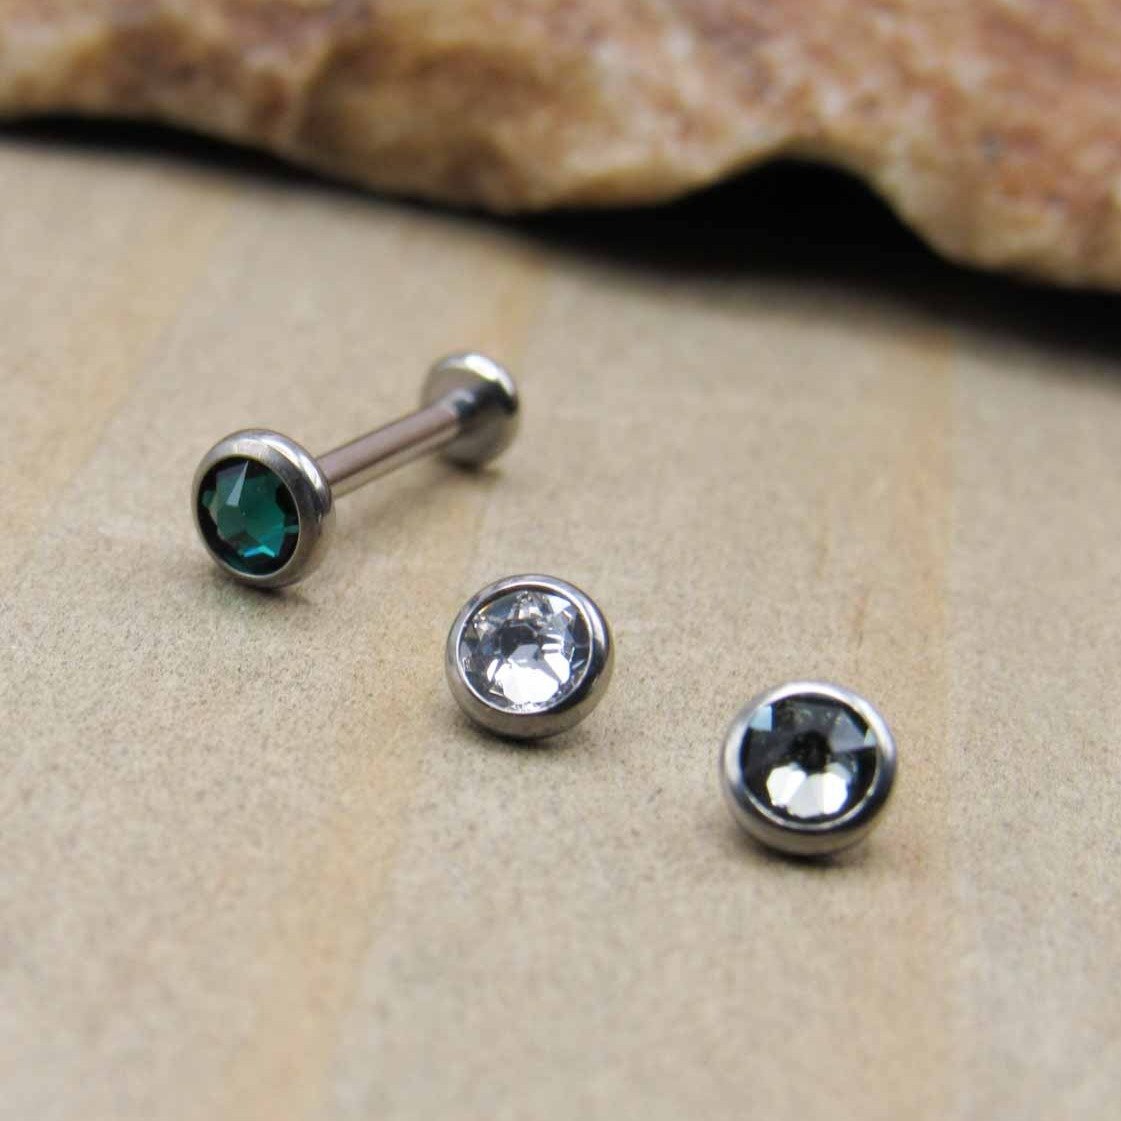 Titanium flat back earring set of 3 gemstone ends 1 internally threaded labret stud helix earrings tragus gems philtrum jewelry conch earlobe - SirenBodyJewelry